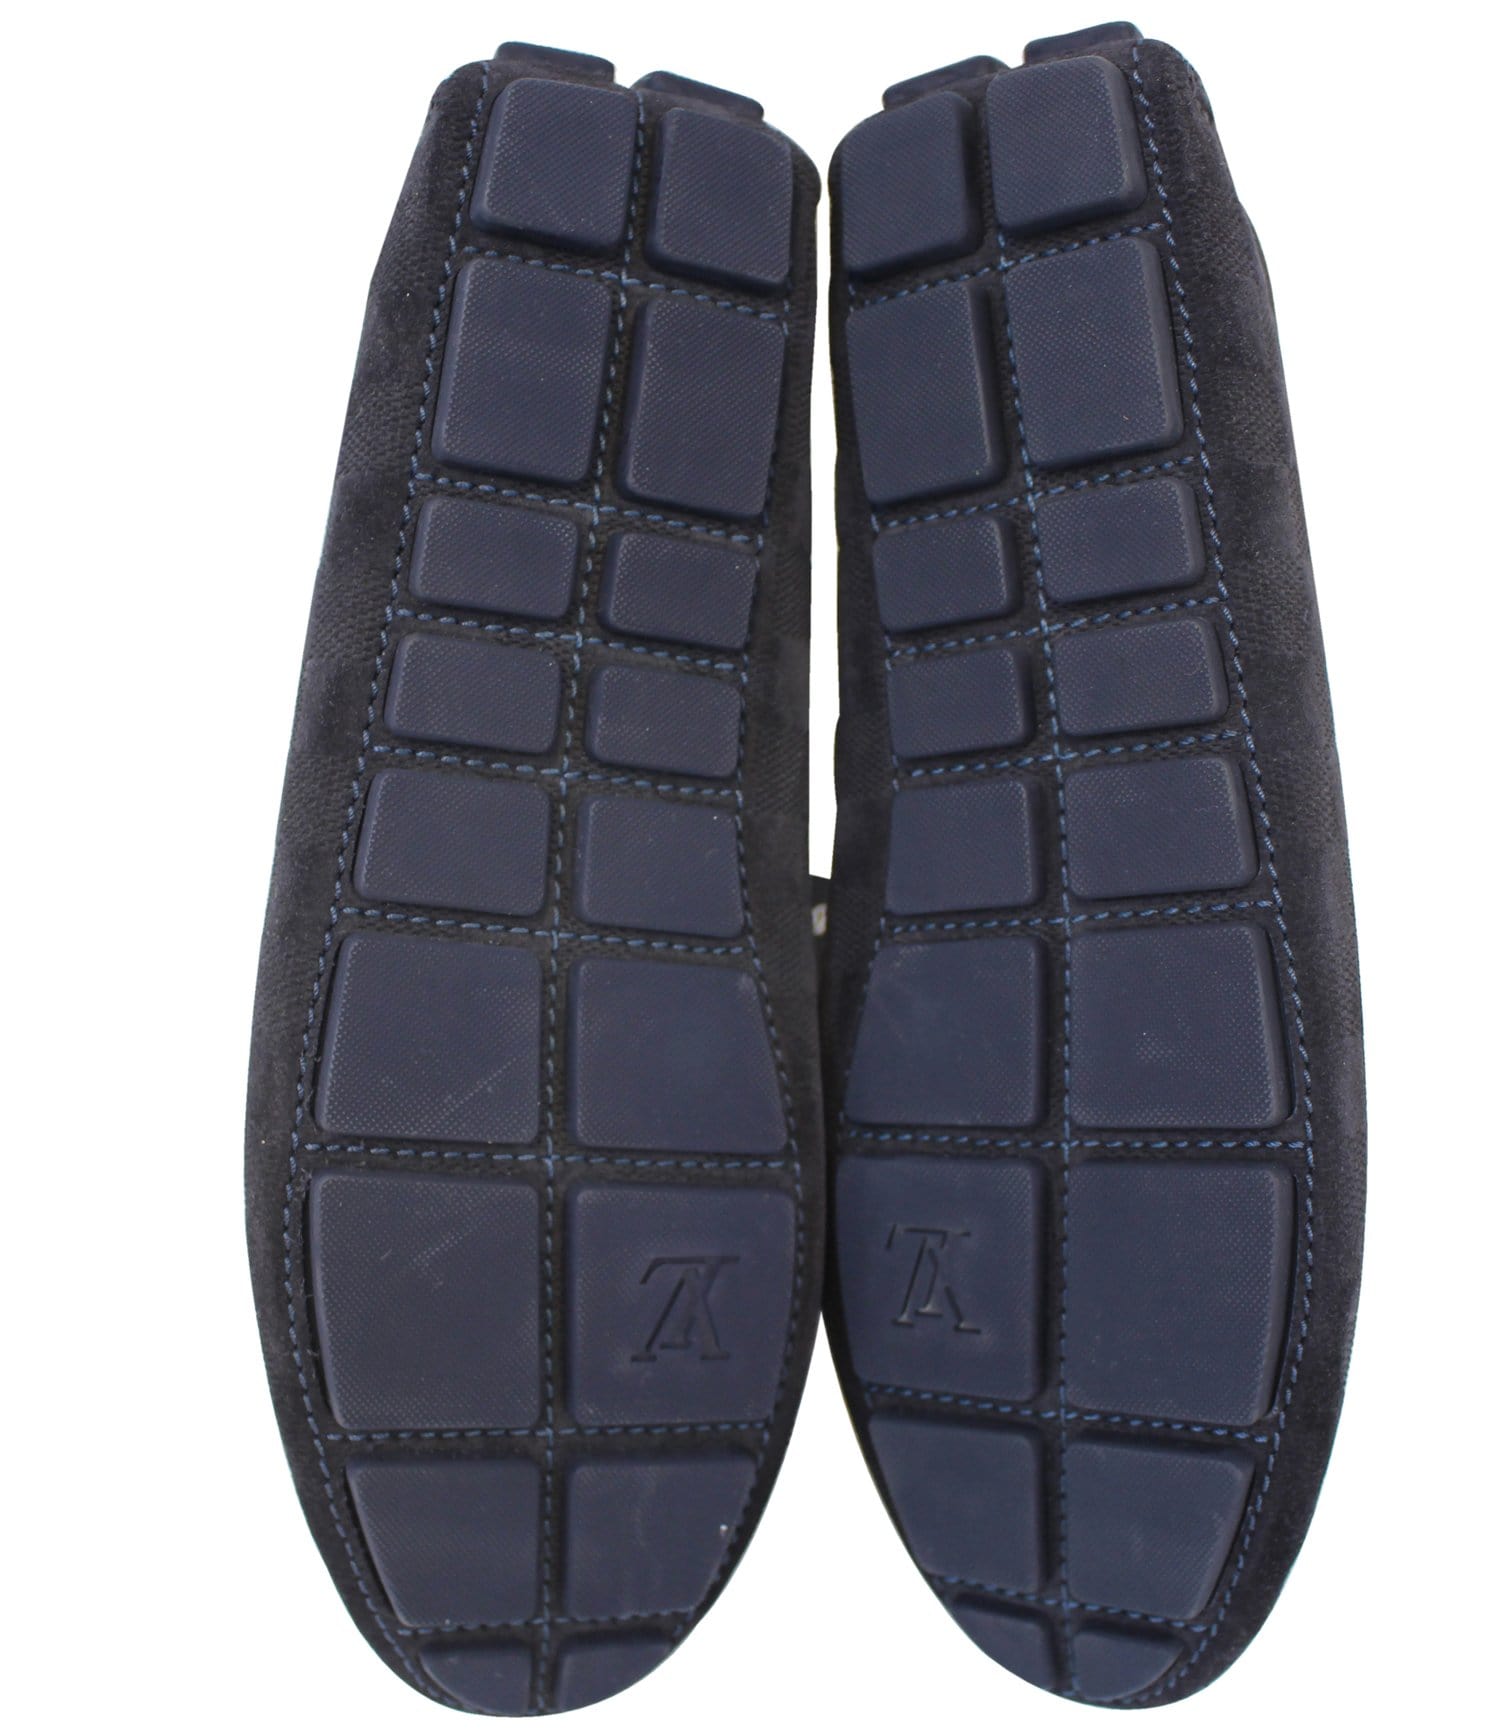 Louis Vuitton Major Loafer Graphite. Size 08.5